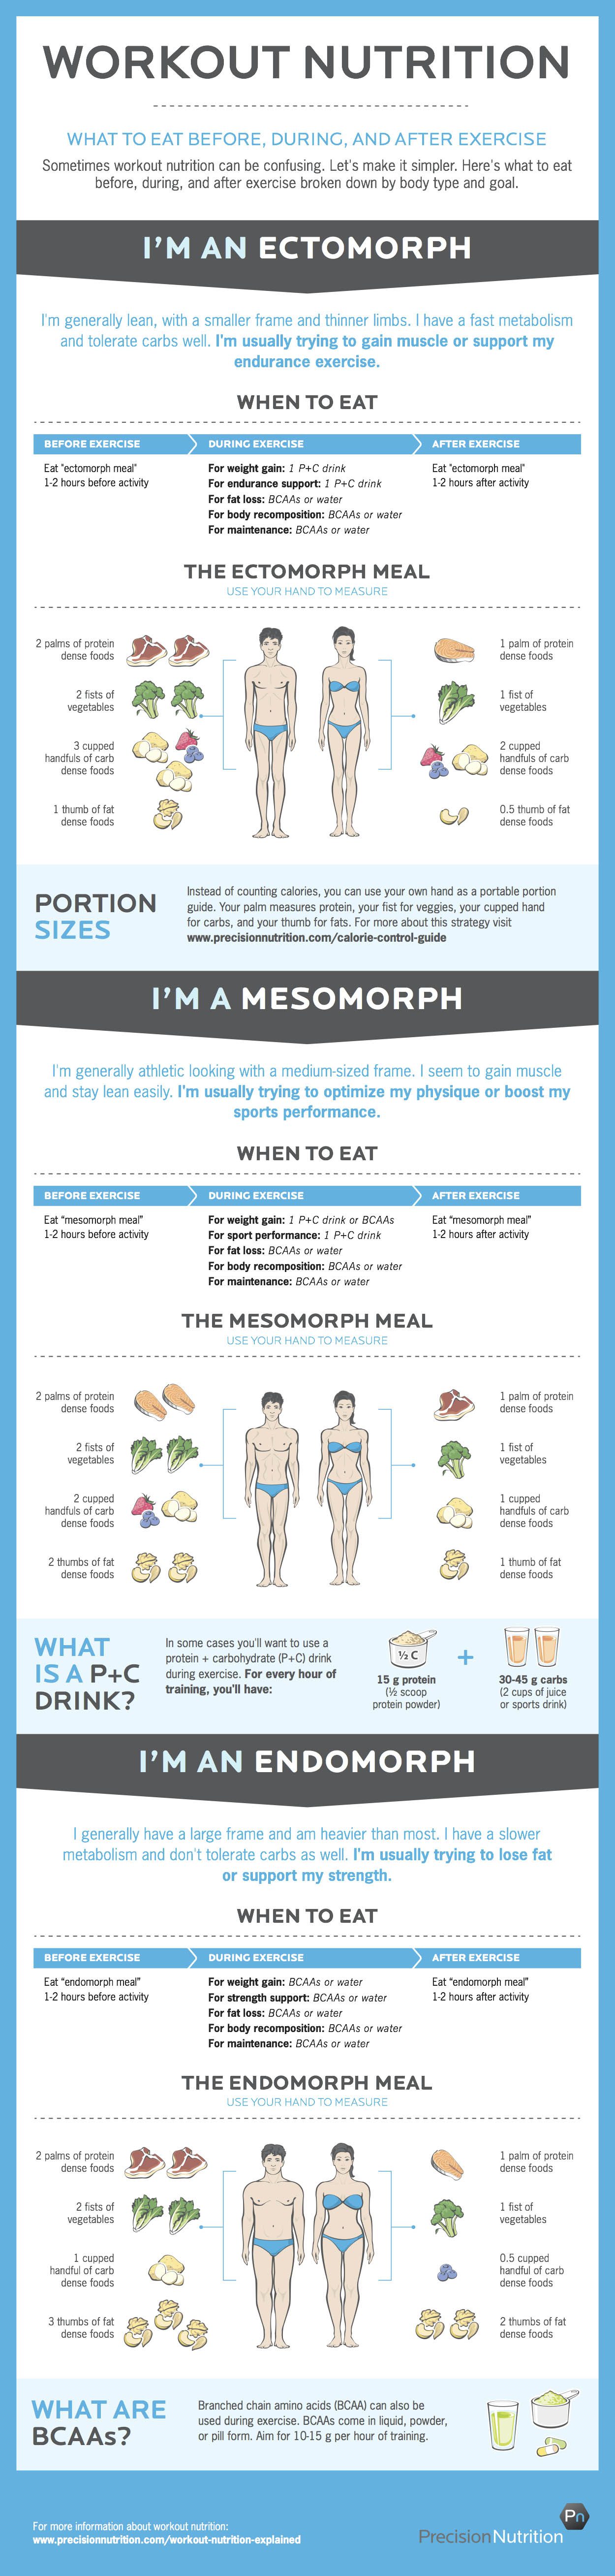 https://www.precisionnutrition.com/wordpress/wp-content/uploads/2014/05/Workout-Nutrition-Infographic.jpg